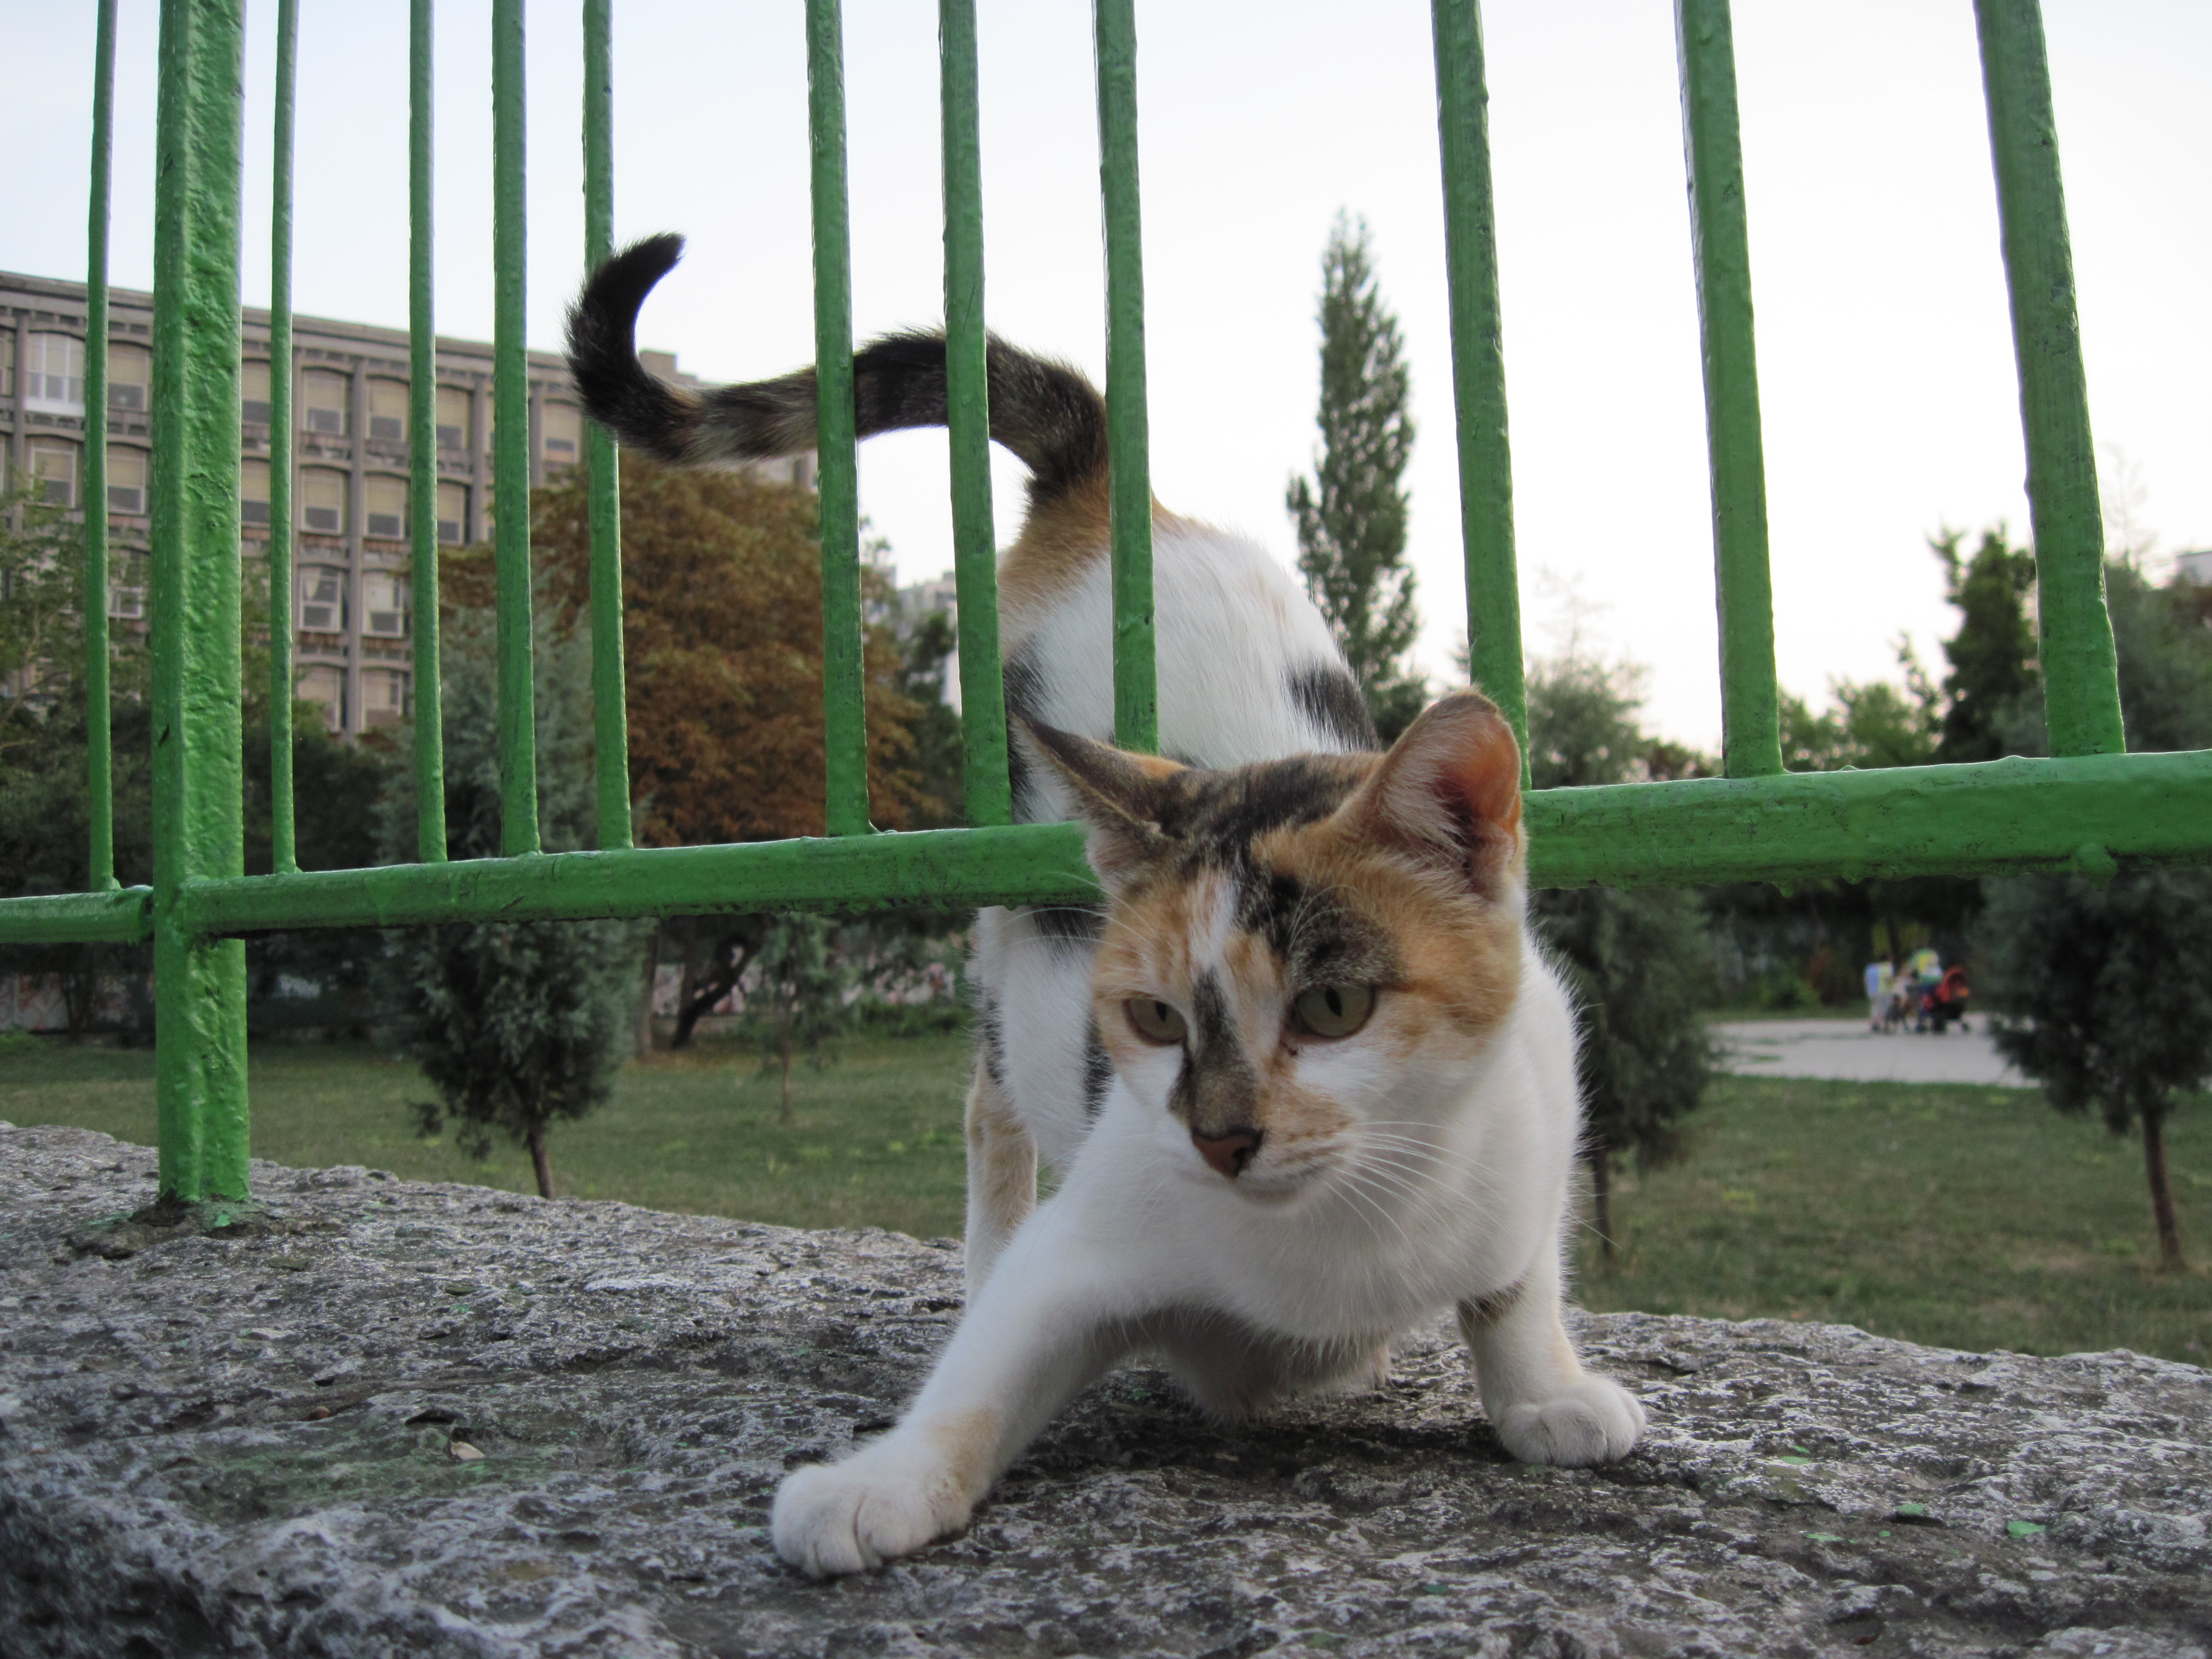 Playful street cat photo